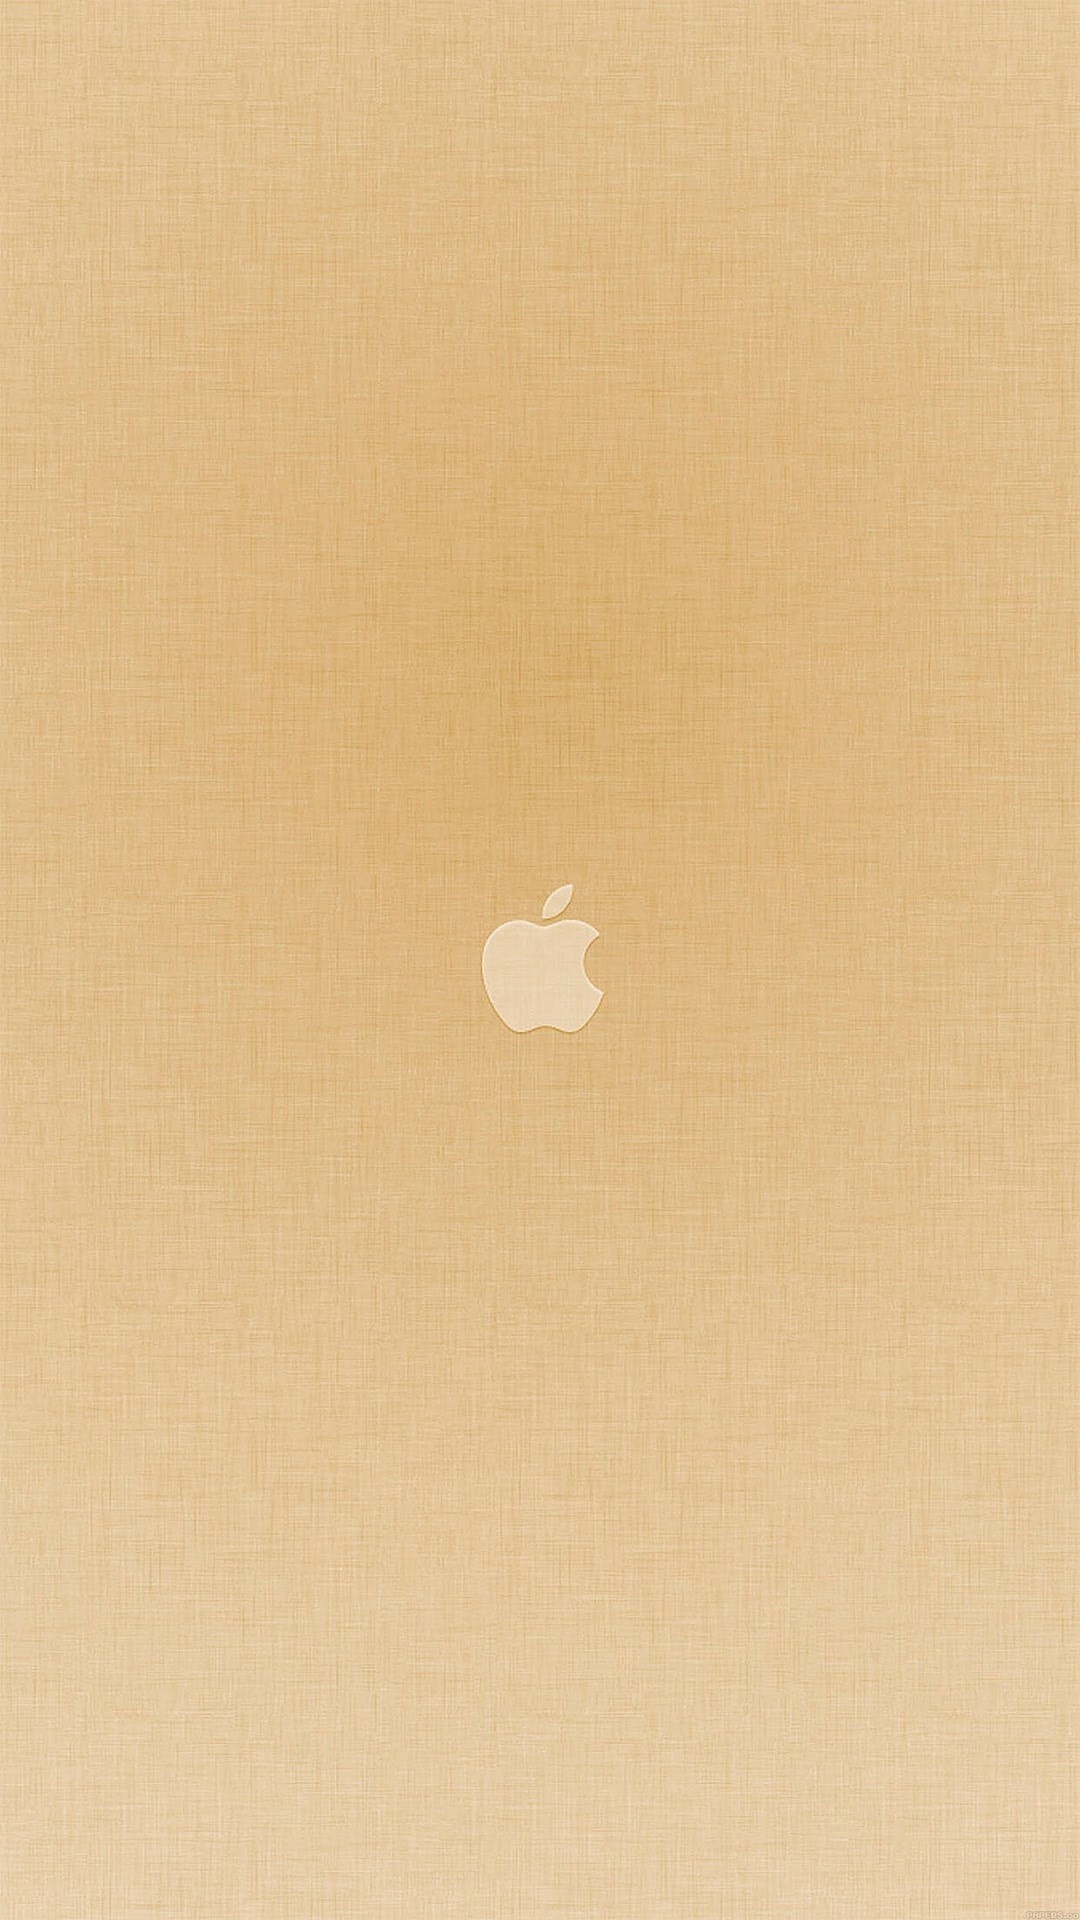 White Apple iPhone 6 wallpaper